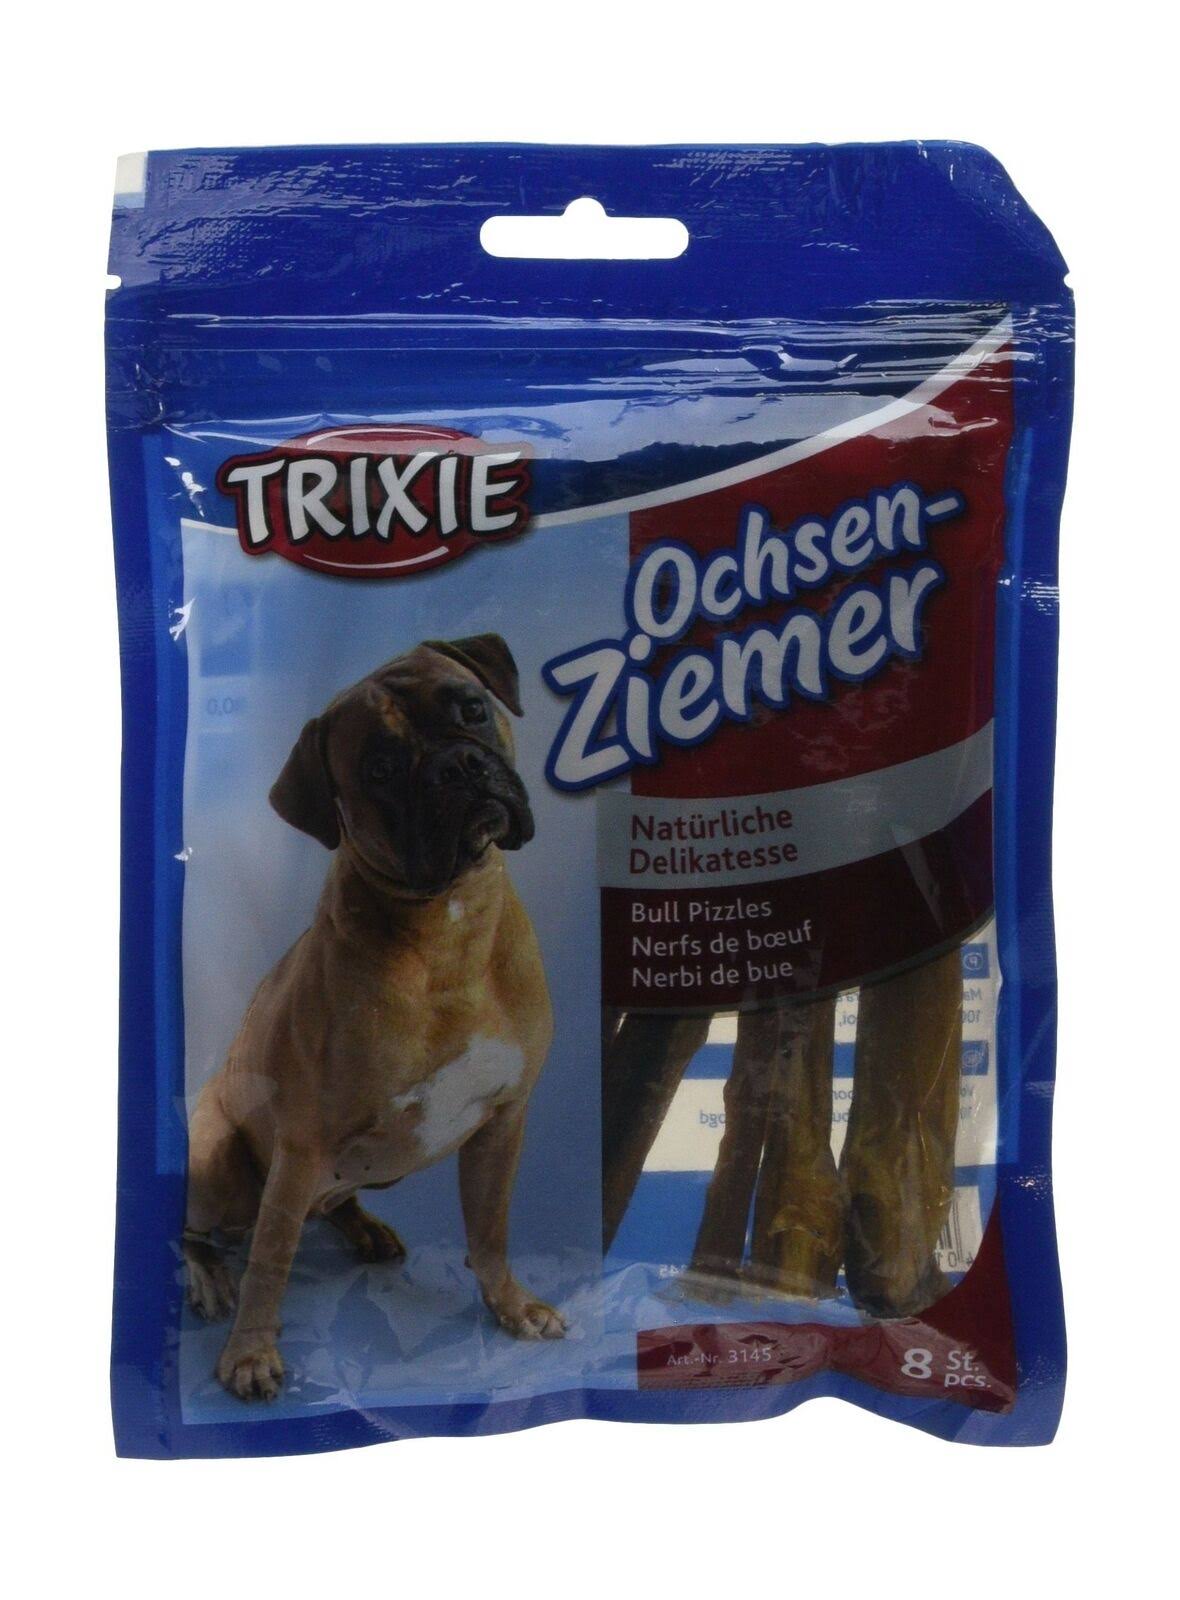 Trixie Bull Pizzles Dog Treats - 8 Sticks